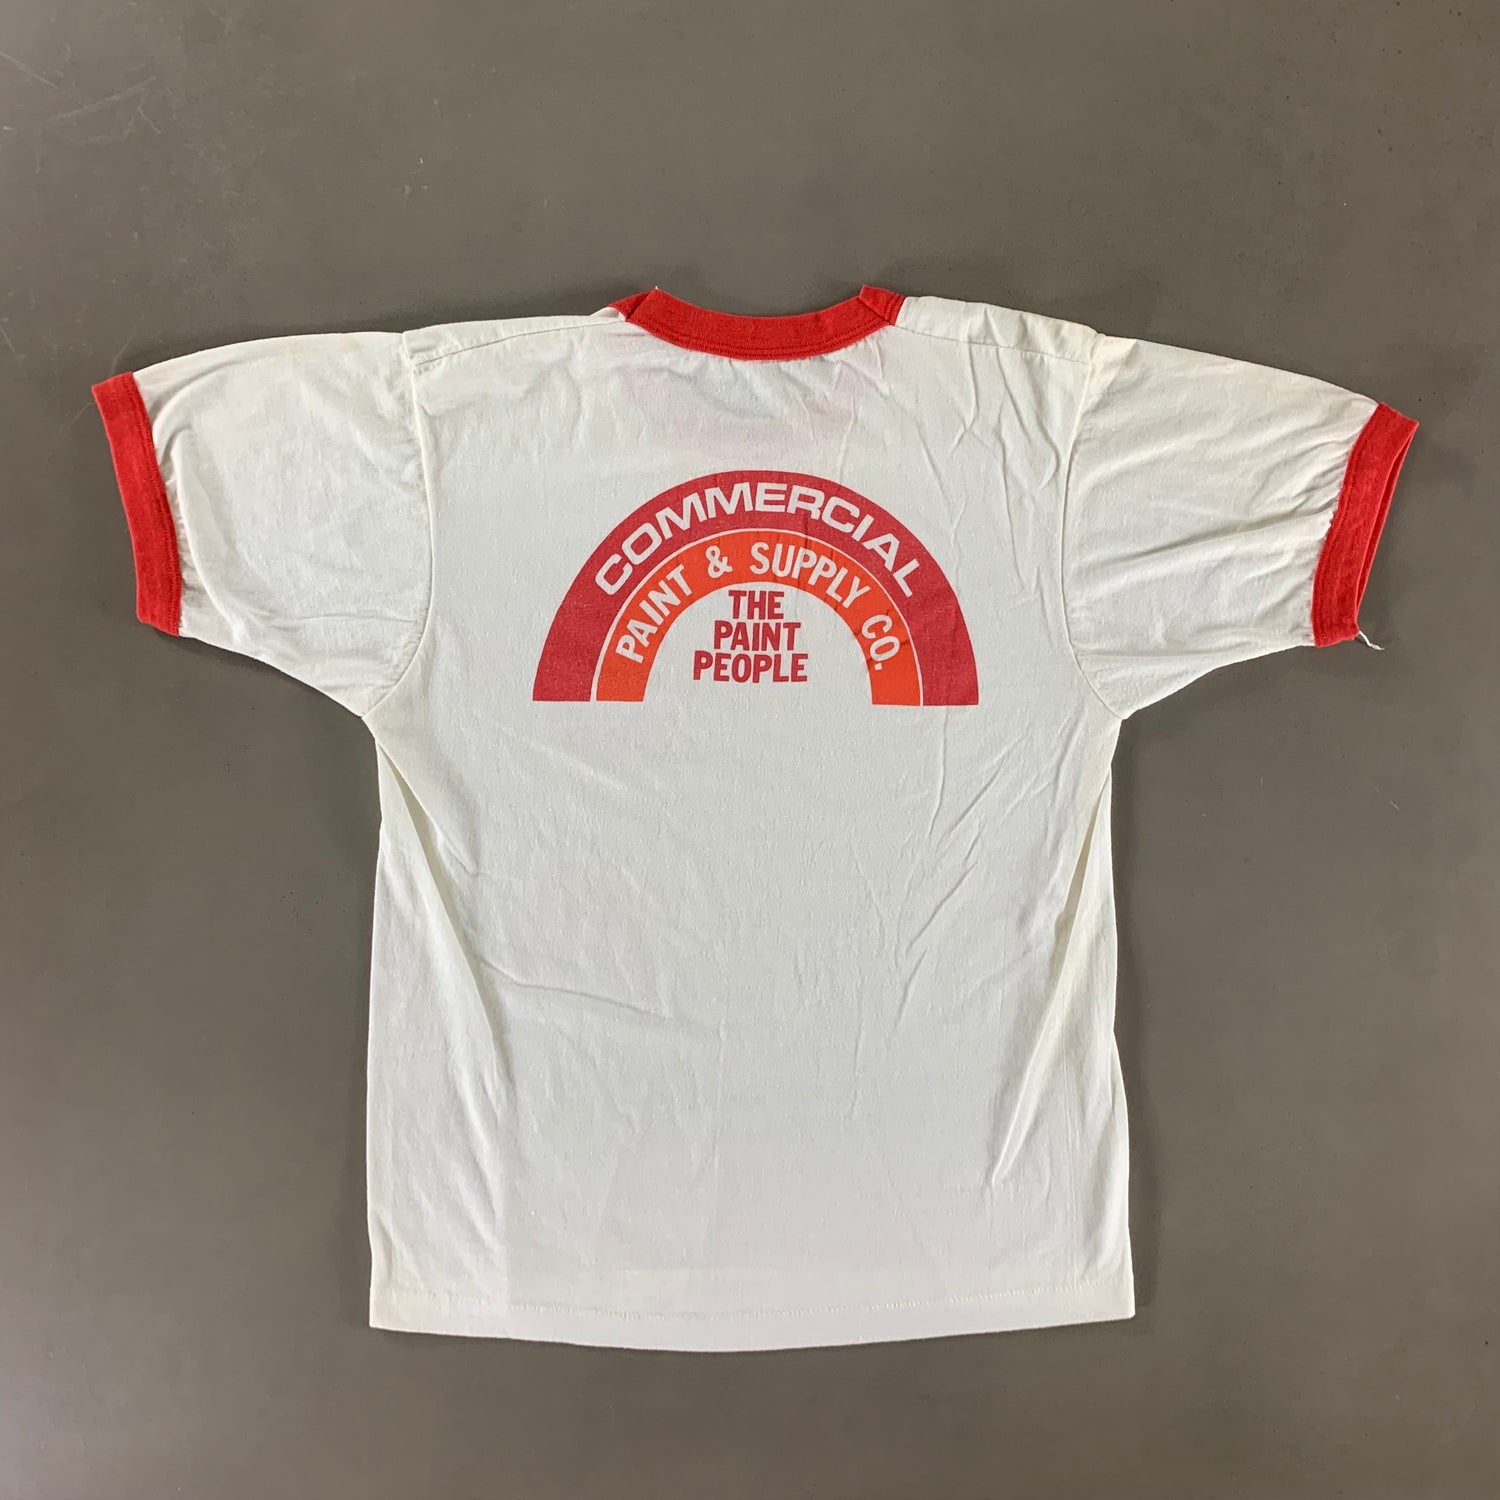 Vintage 1980s Bruning Paints T-shirt size Large